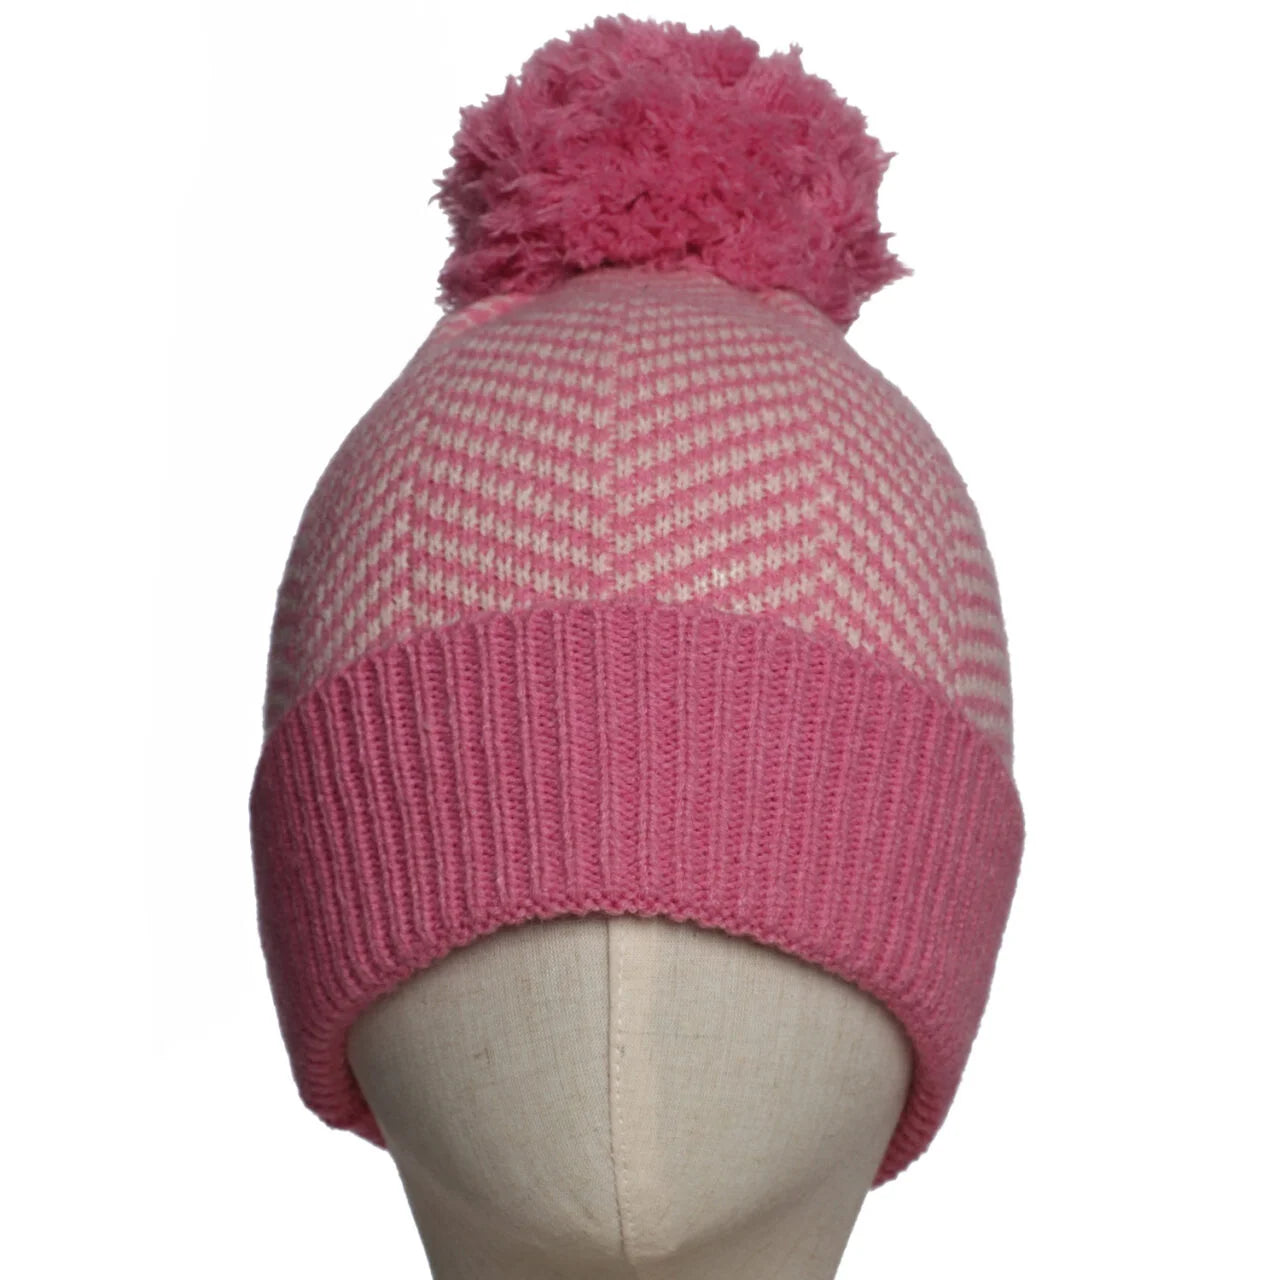 Fab Gifts | Winter Accessories Winter Beanie Herringbone Pink by Weirs of Baggot Street